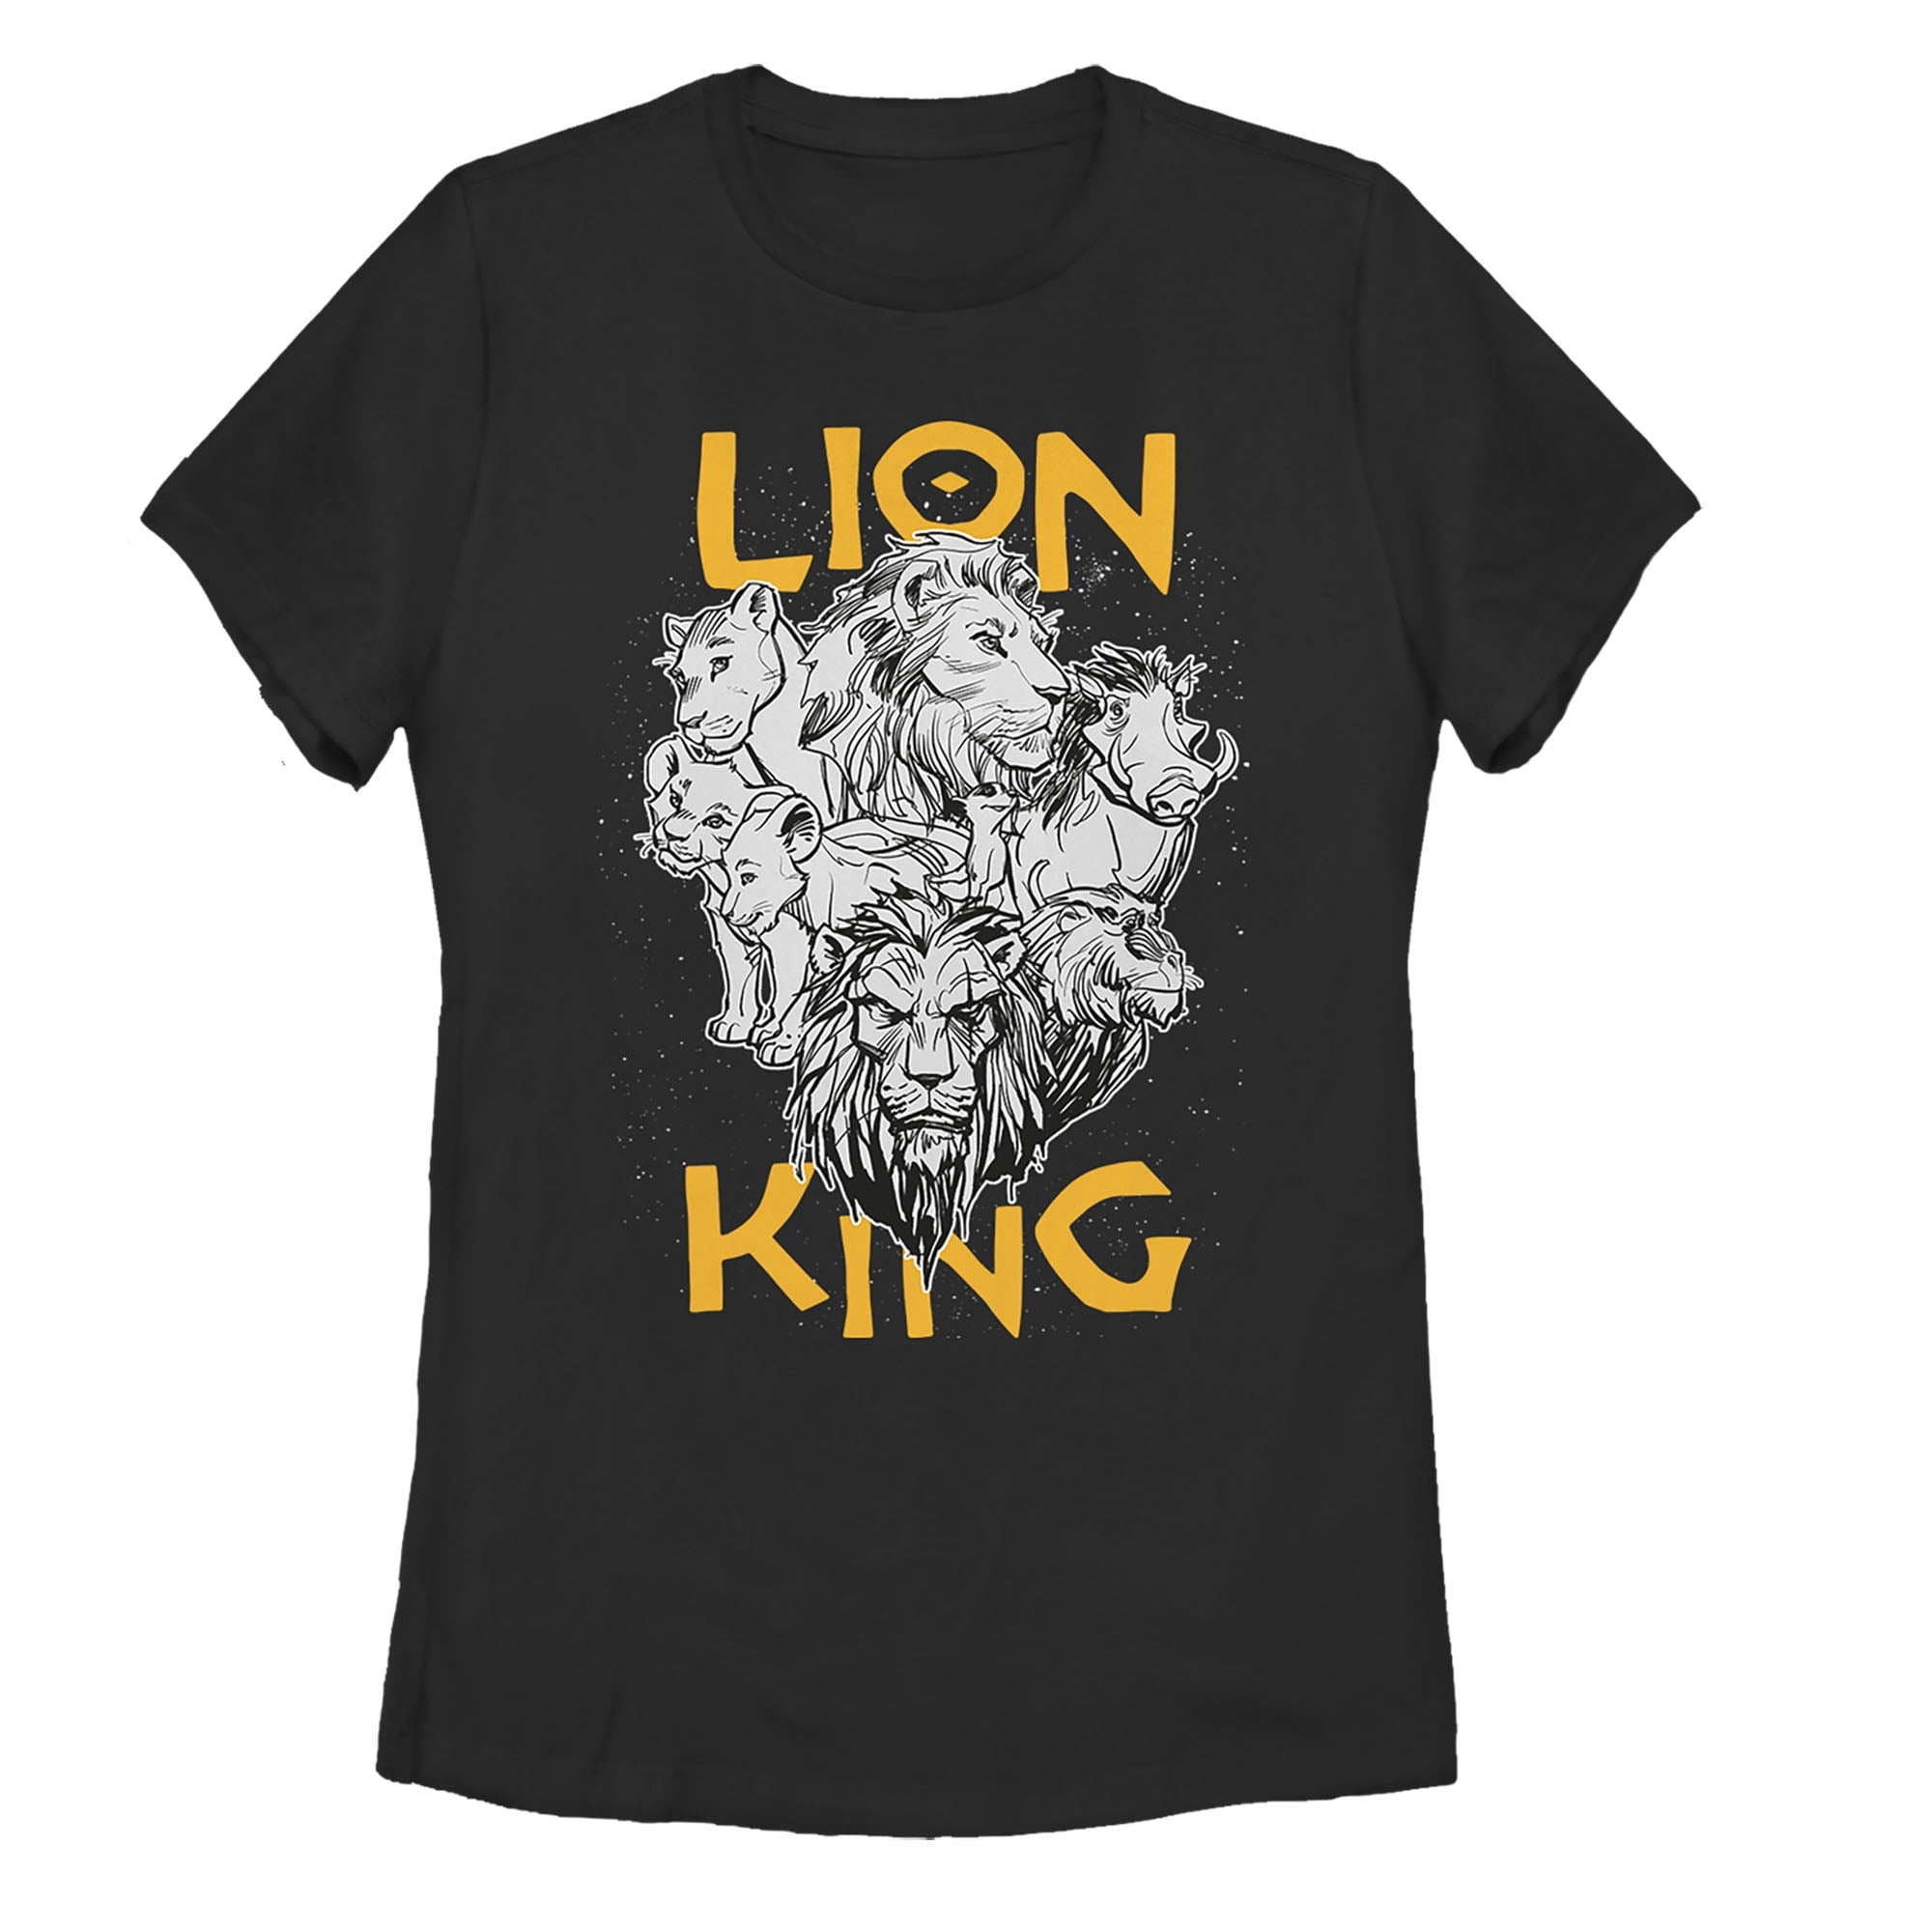 Disney Womens The Lion King Movie Group Sweatshirt